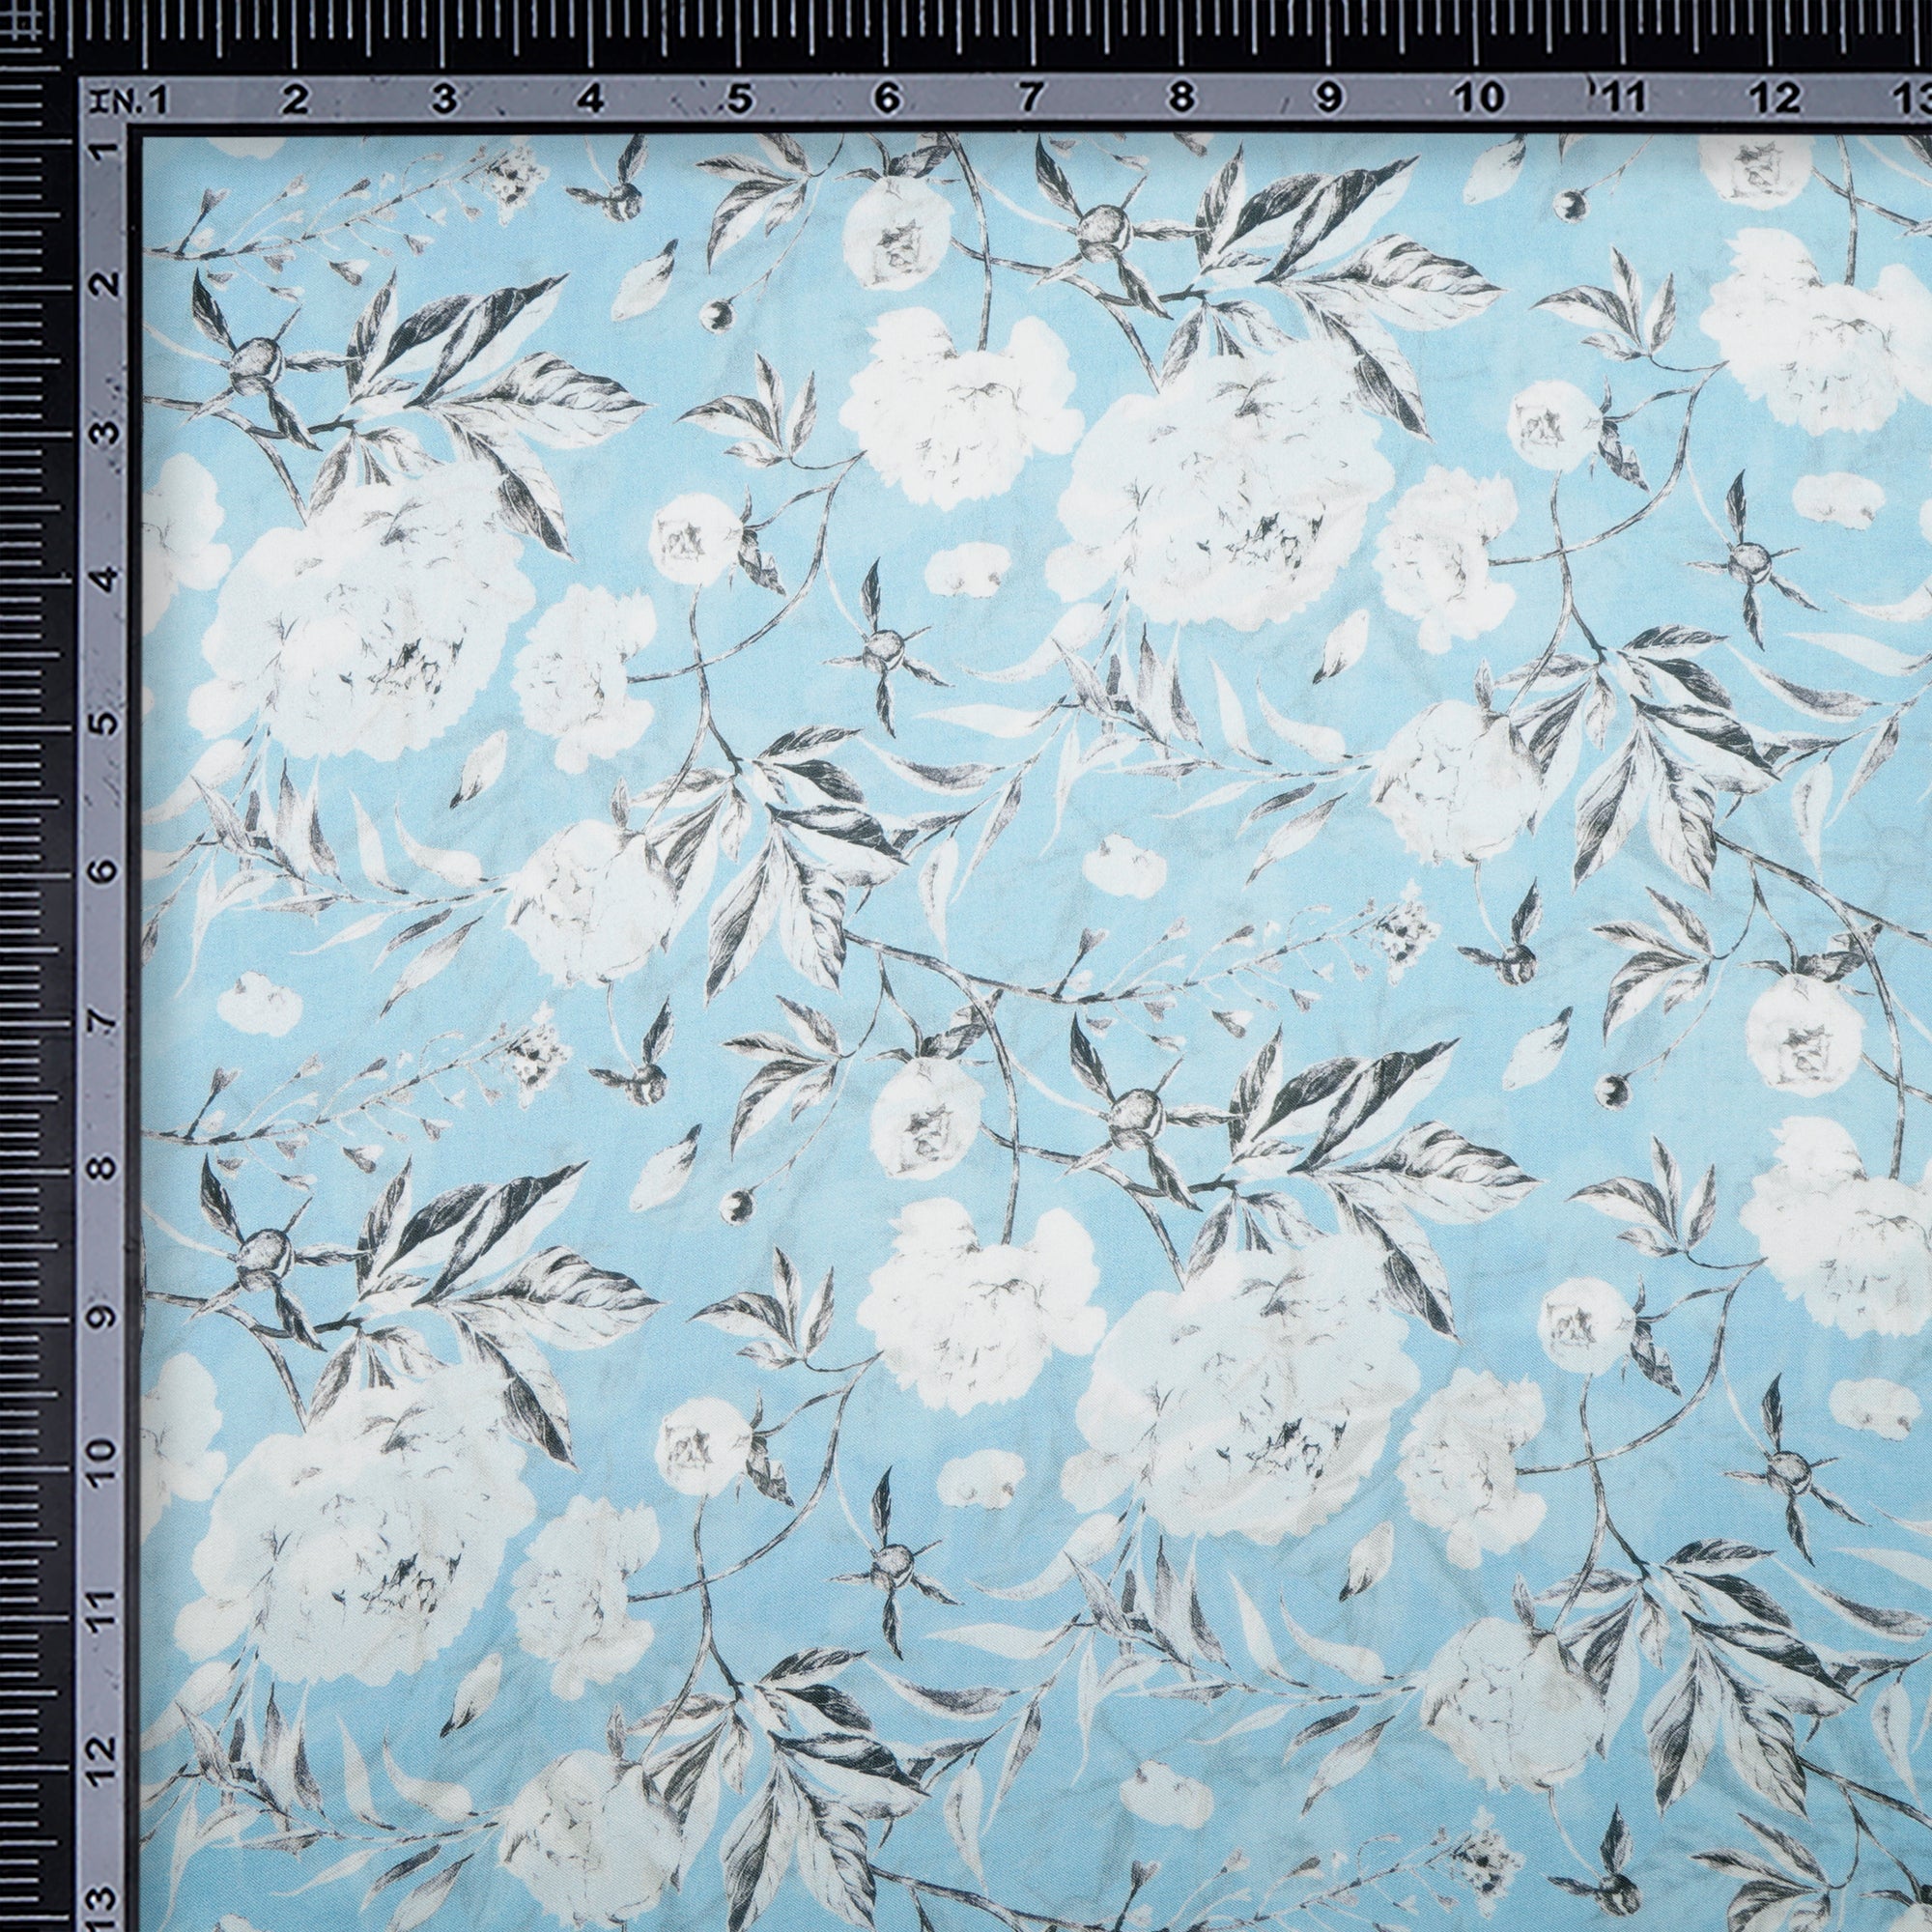 Ice Water Floral Pattern Digital Printed Georgette Satin Fabric